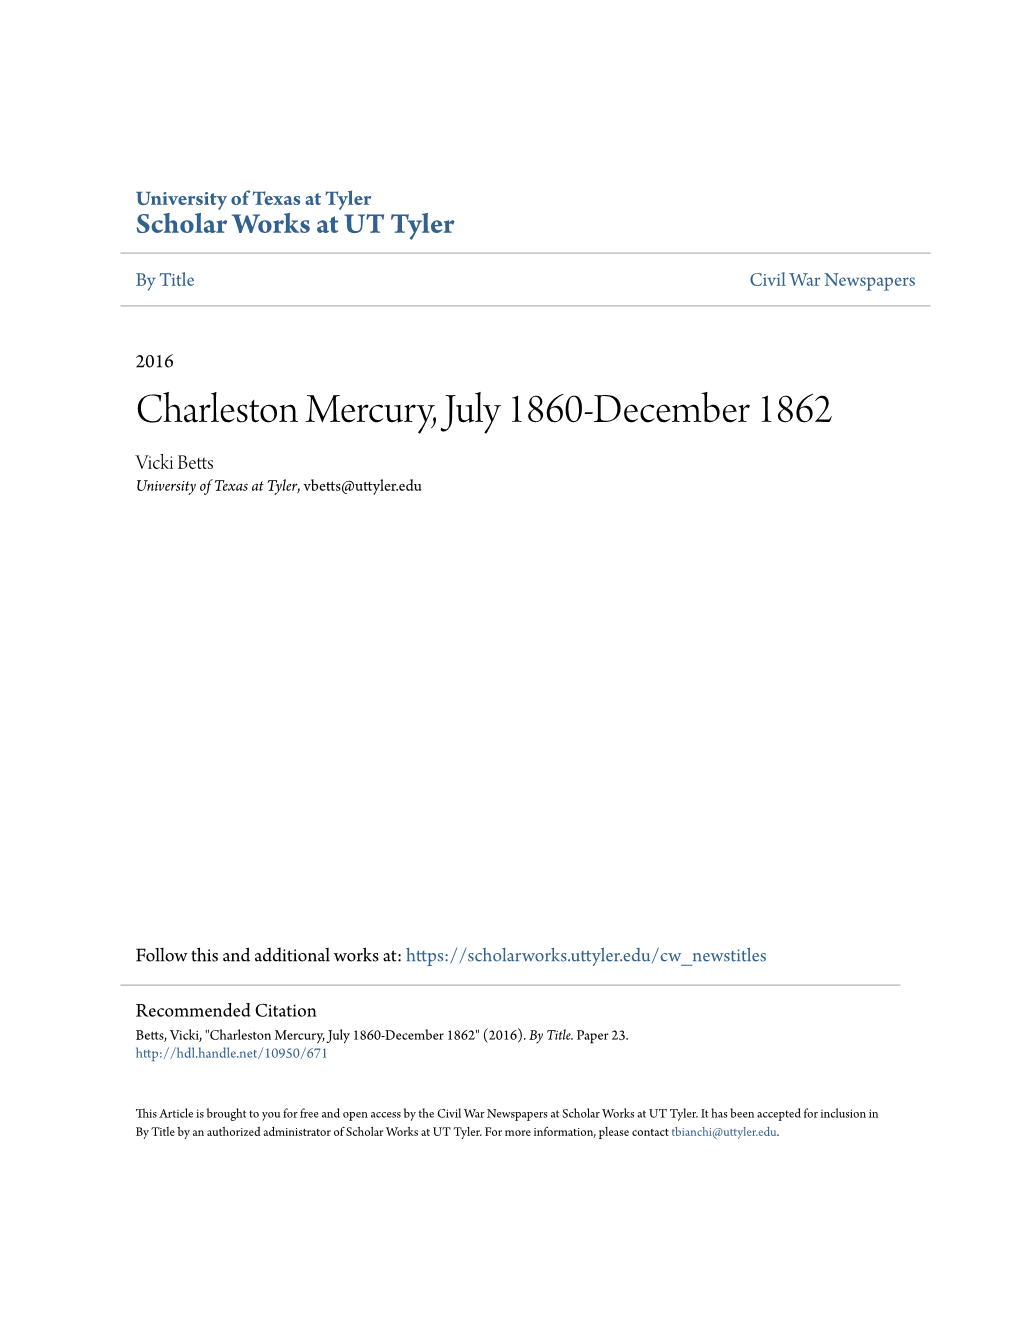 Charleston Mercury, July 1860-December 1862 Vicki Betts University of Texas at Tyler, Vbetts@Uttyler.Edu